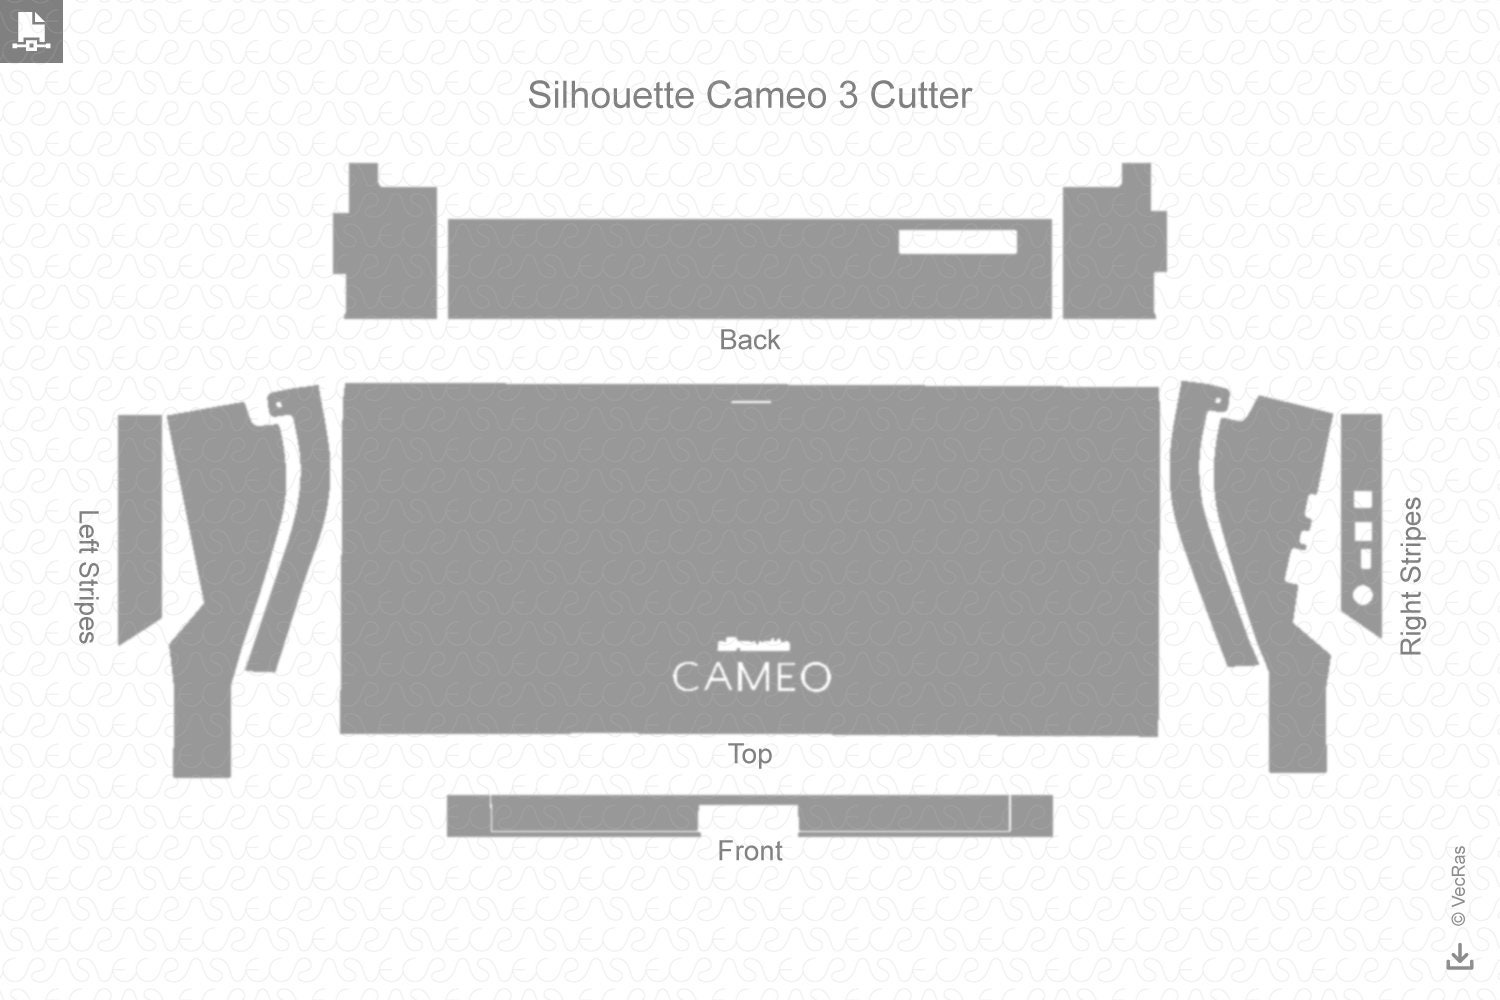 Silhouette Cameo 3-4t Wireless Cutting Machine - White (SILHOUETTE-CAMEO 3)